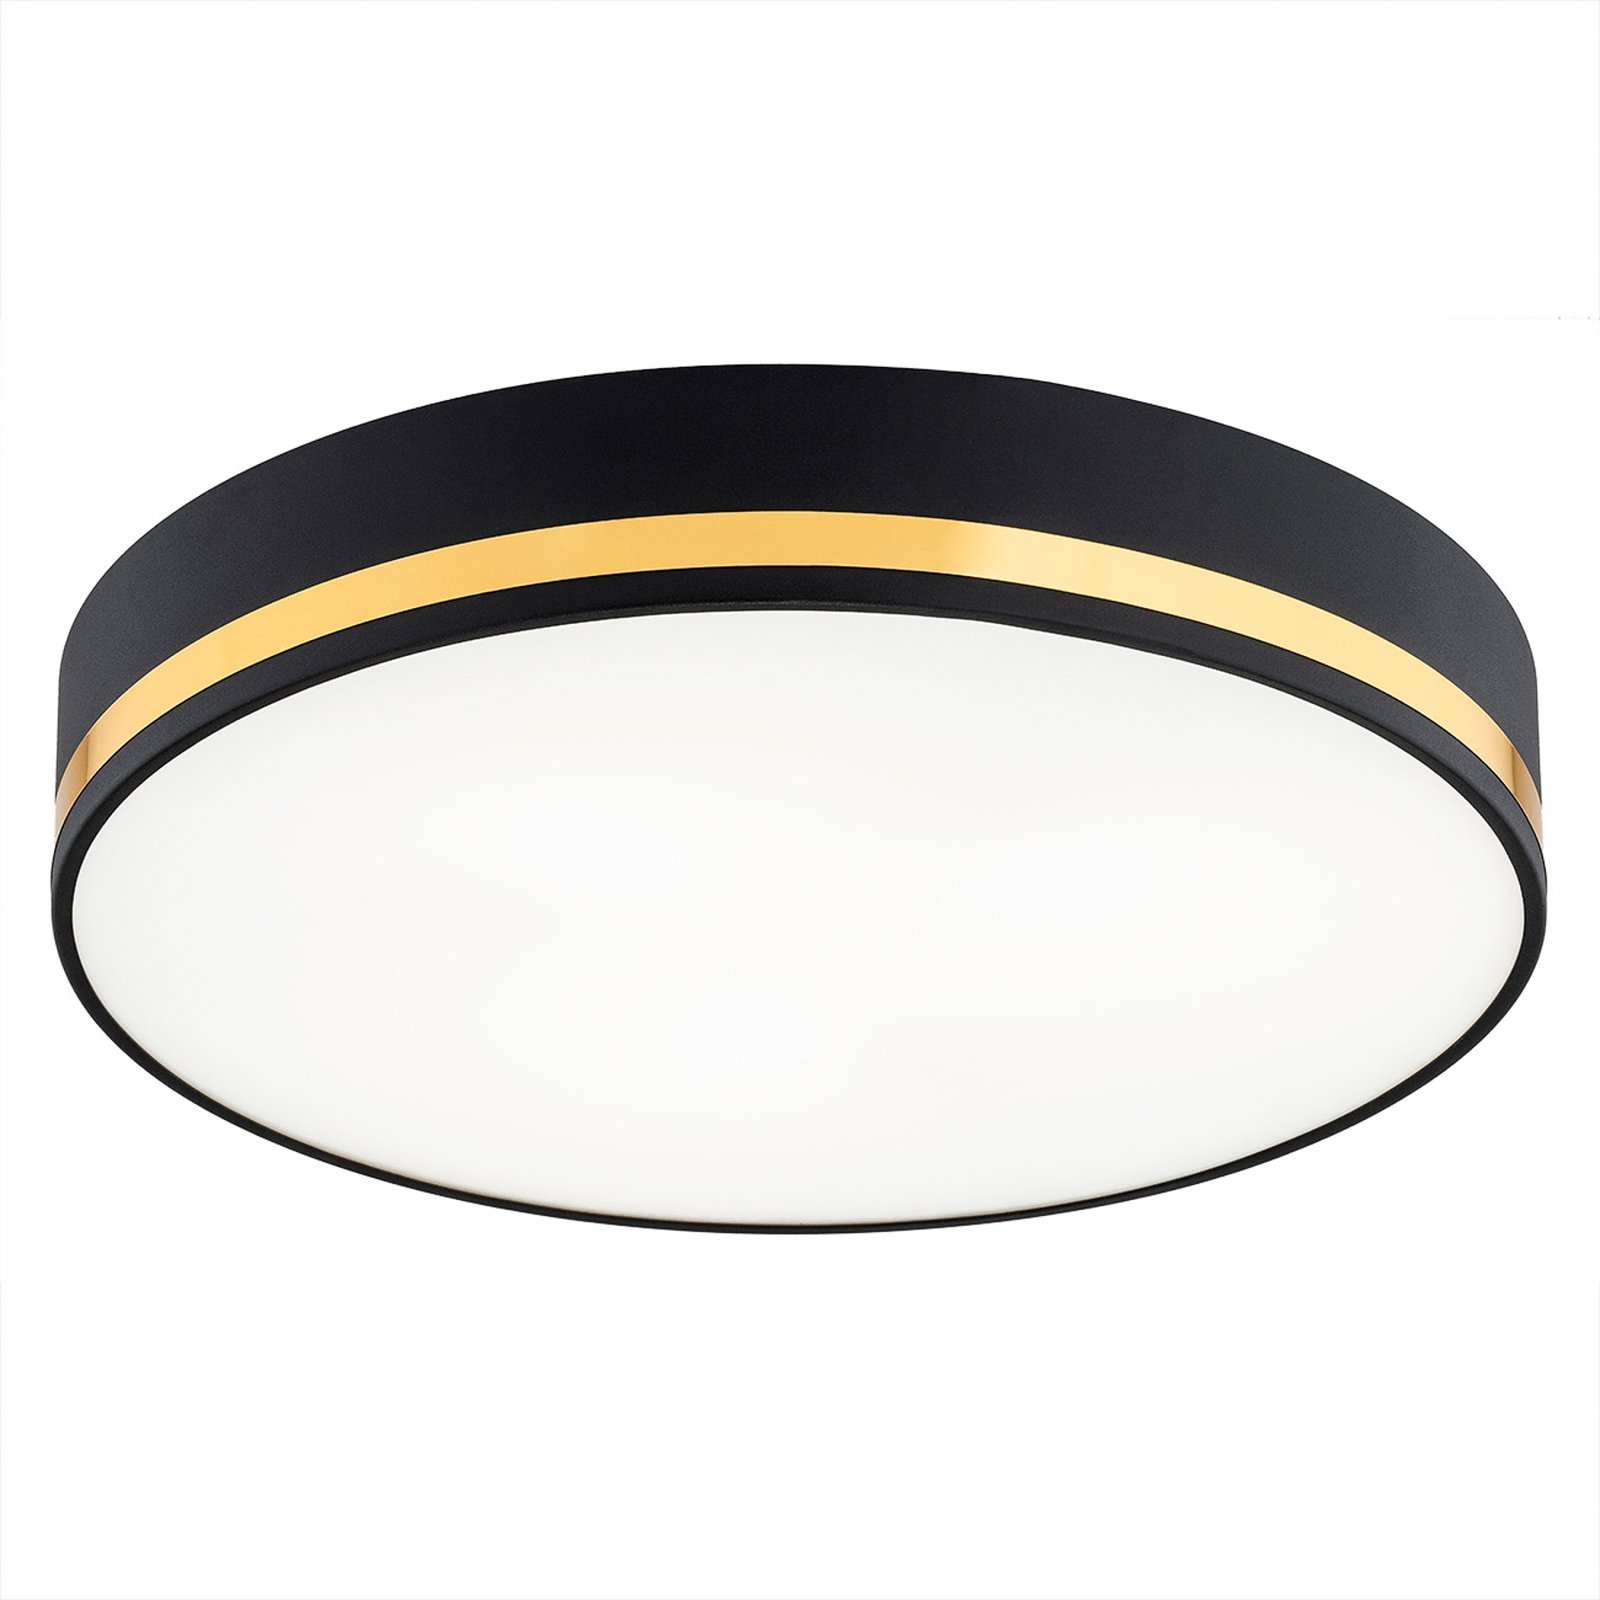 Plafondlamp Amore, goudkleurig gestreept, zwart, Ø 45cm